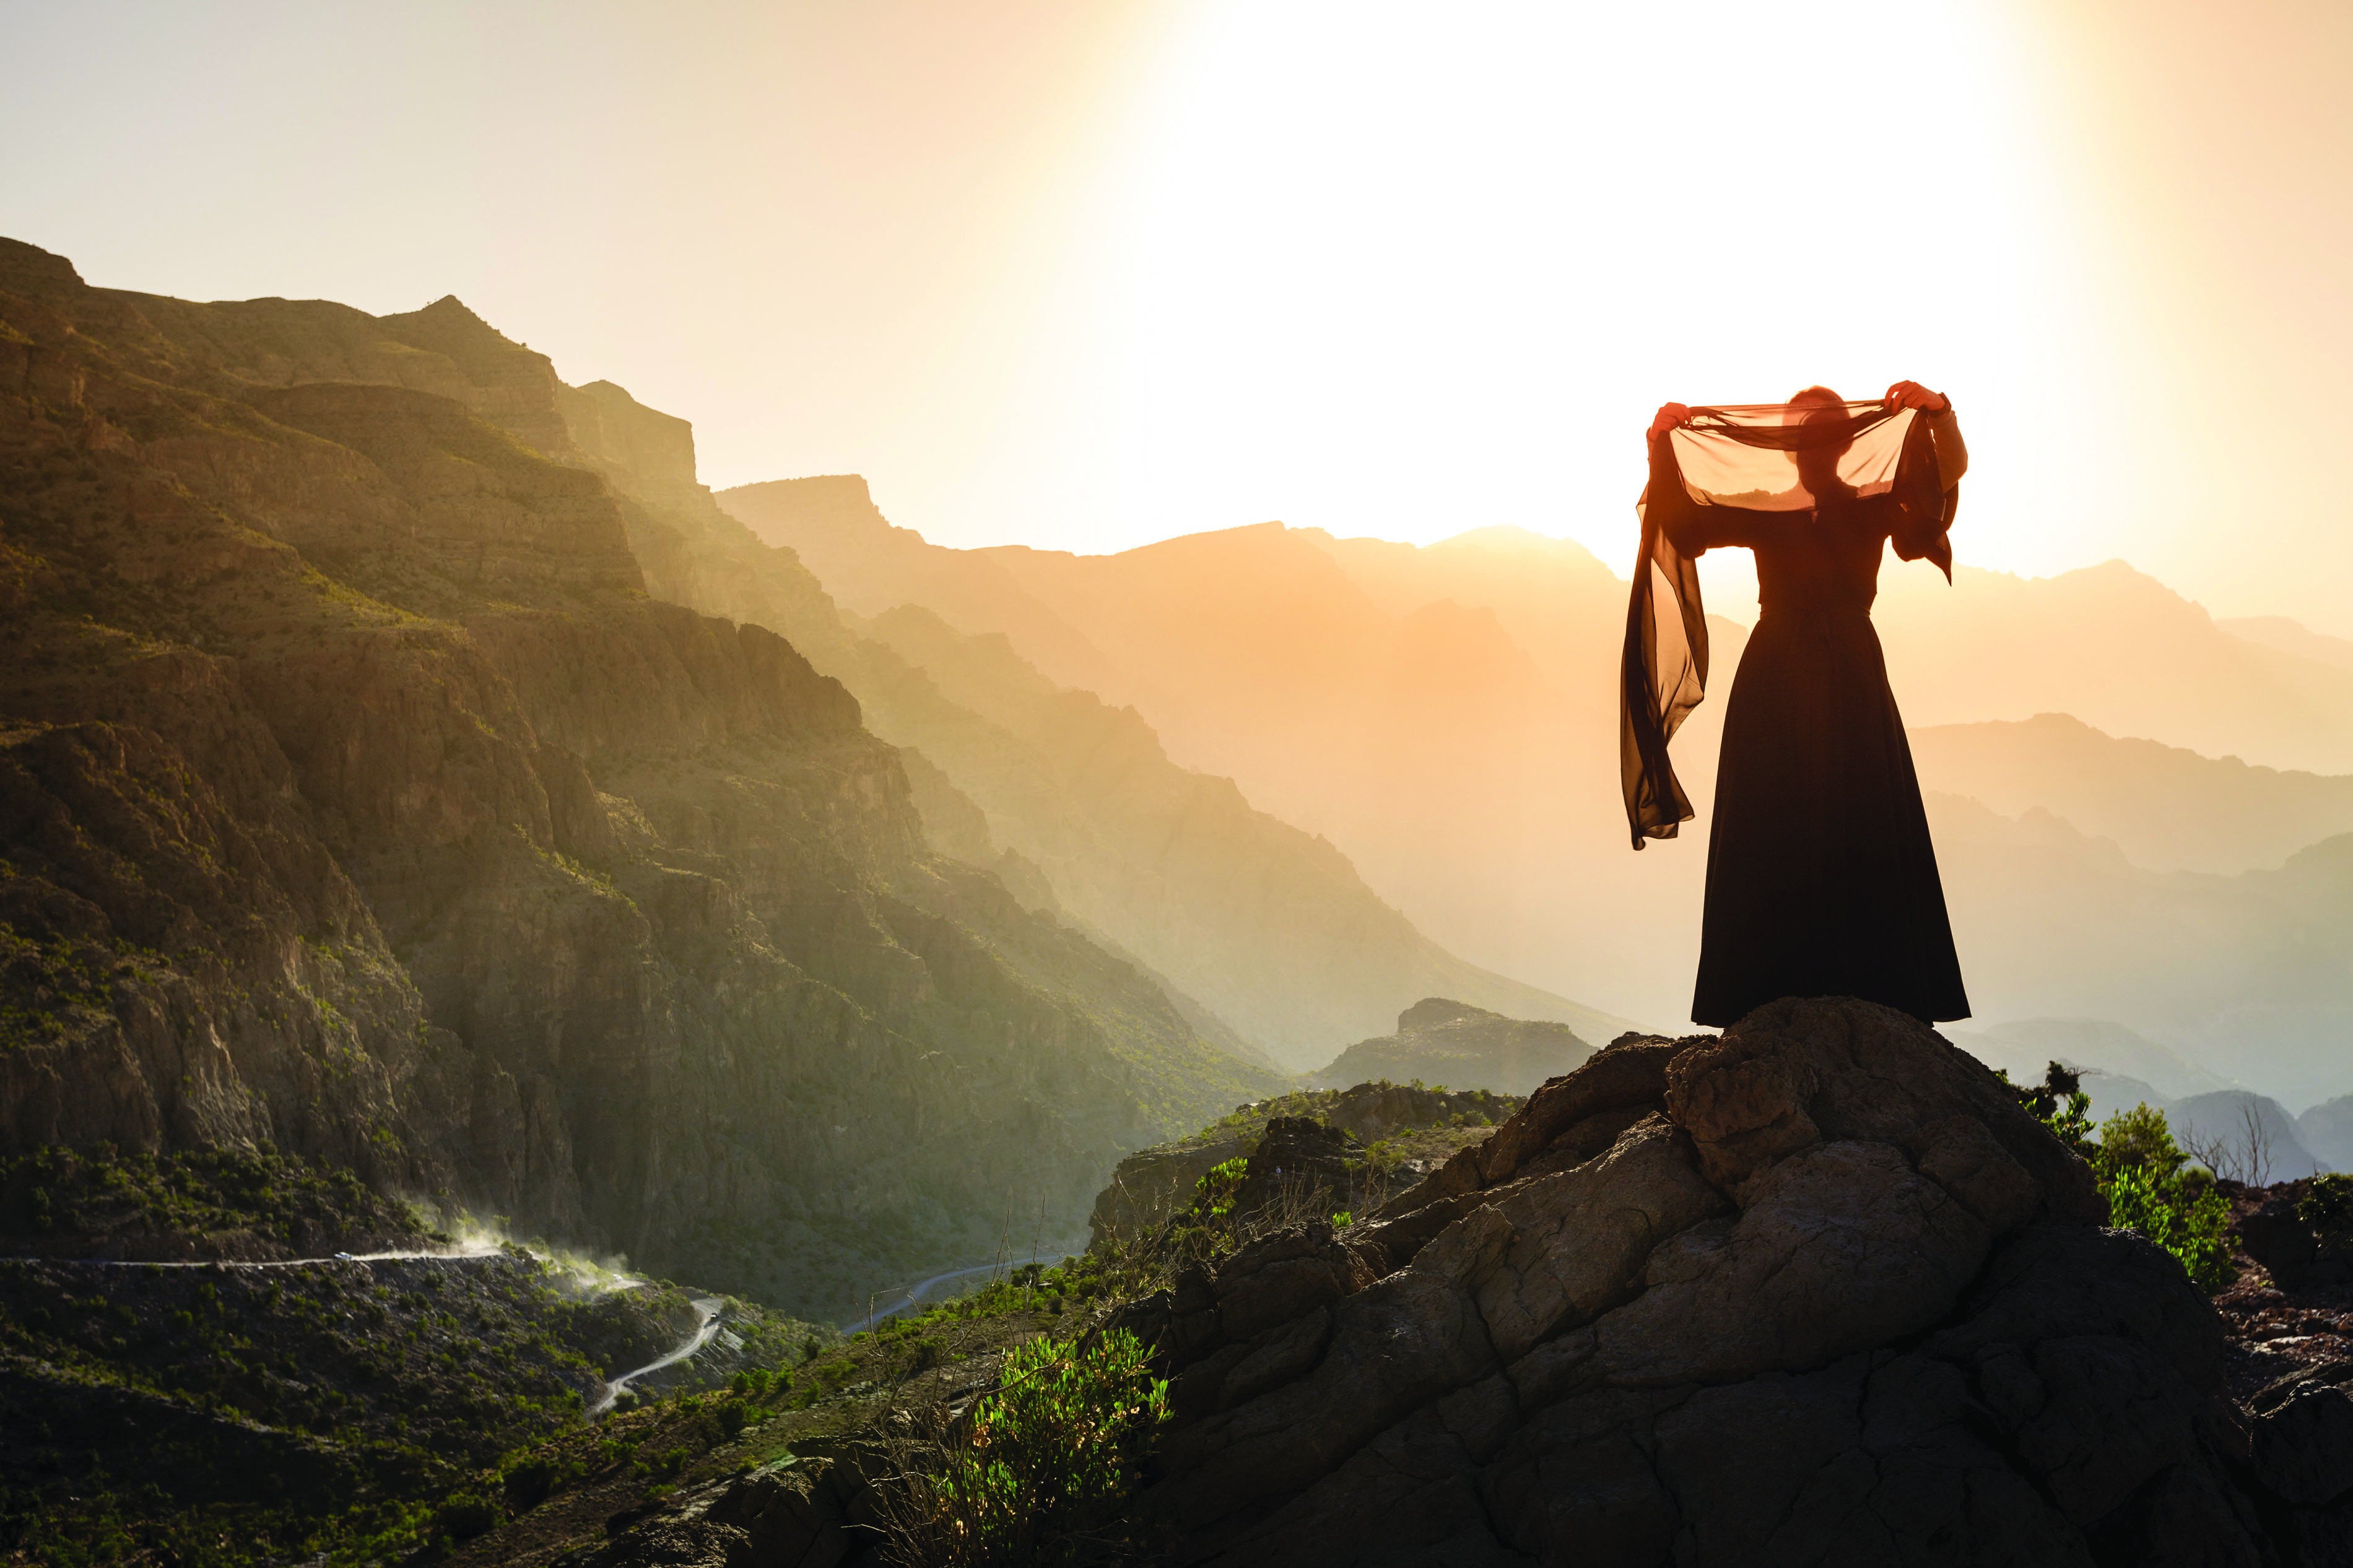 Oman's wonder women share their inspirational stories